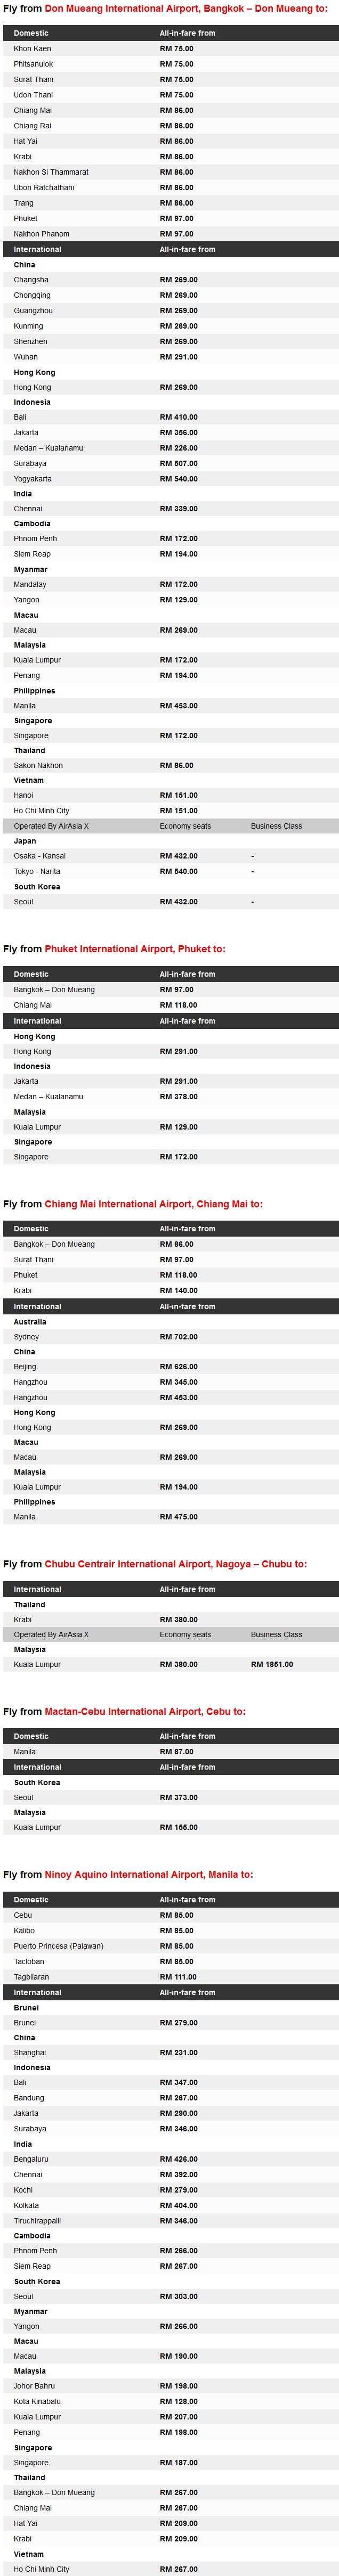 AirAsia Last Minute Deals